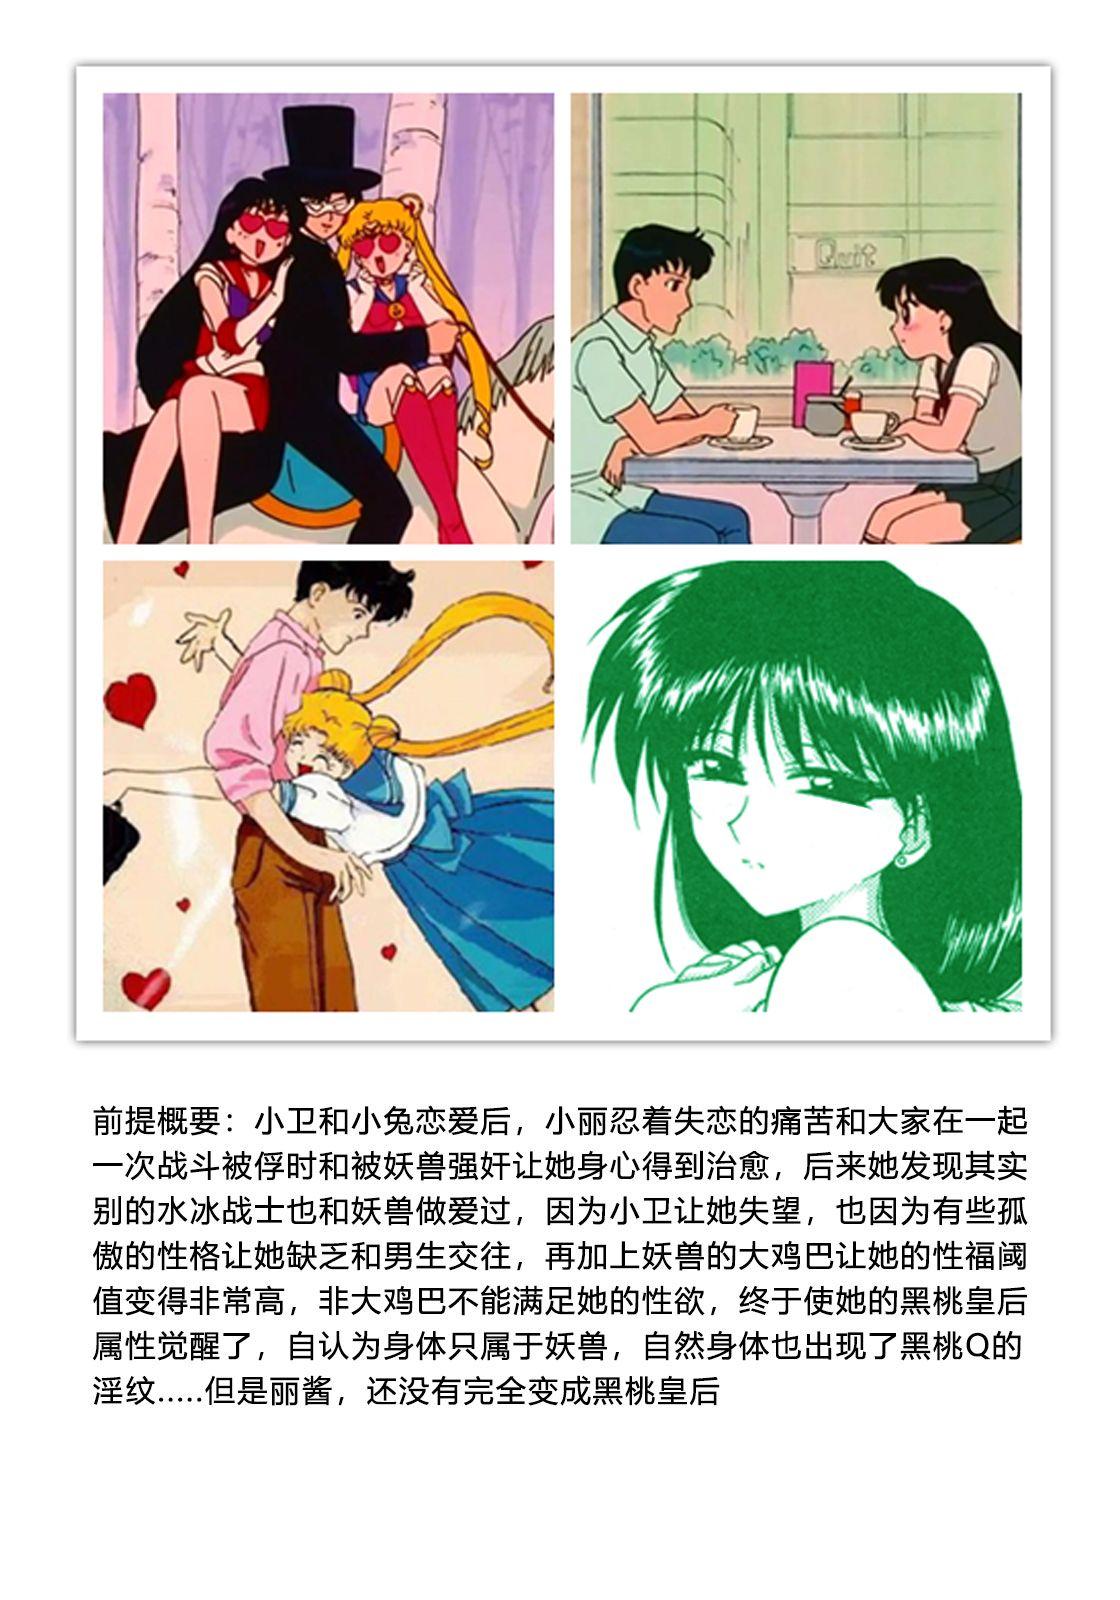 Slapping QUEEN OF SPADES - 黑桃皇后 - Sailor moon Siririca - Page 12